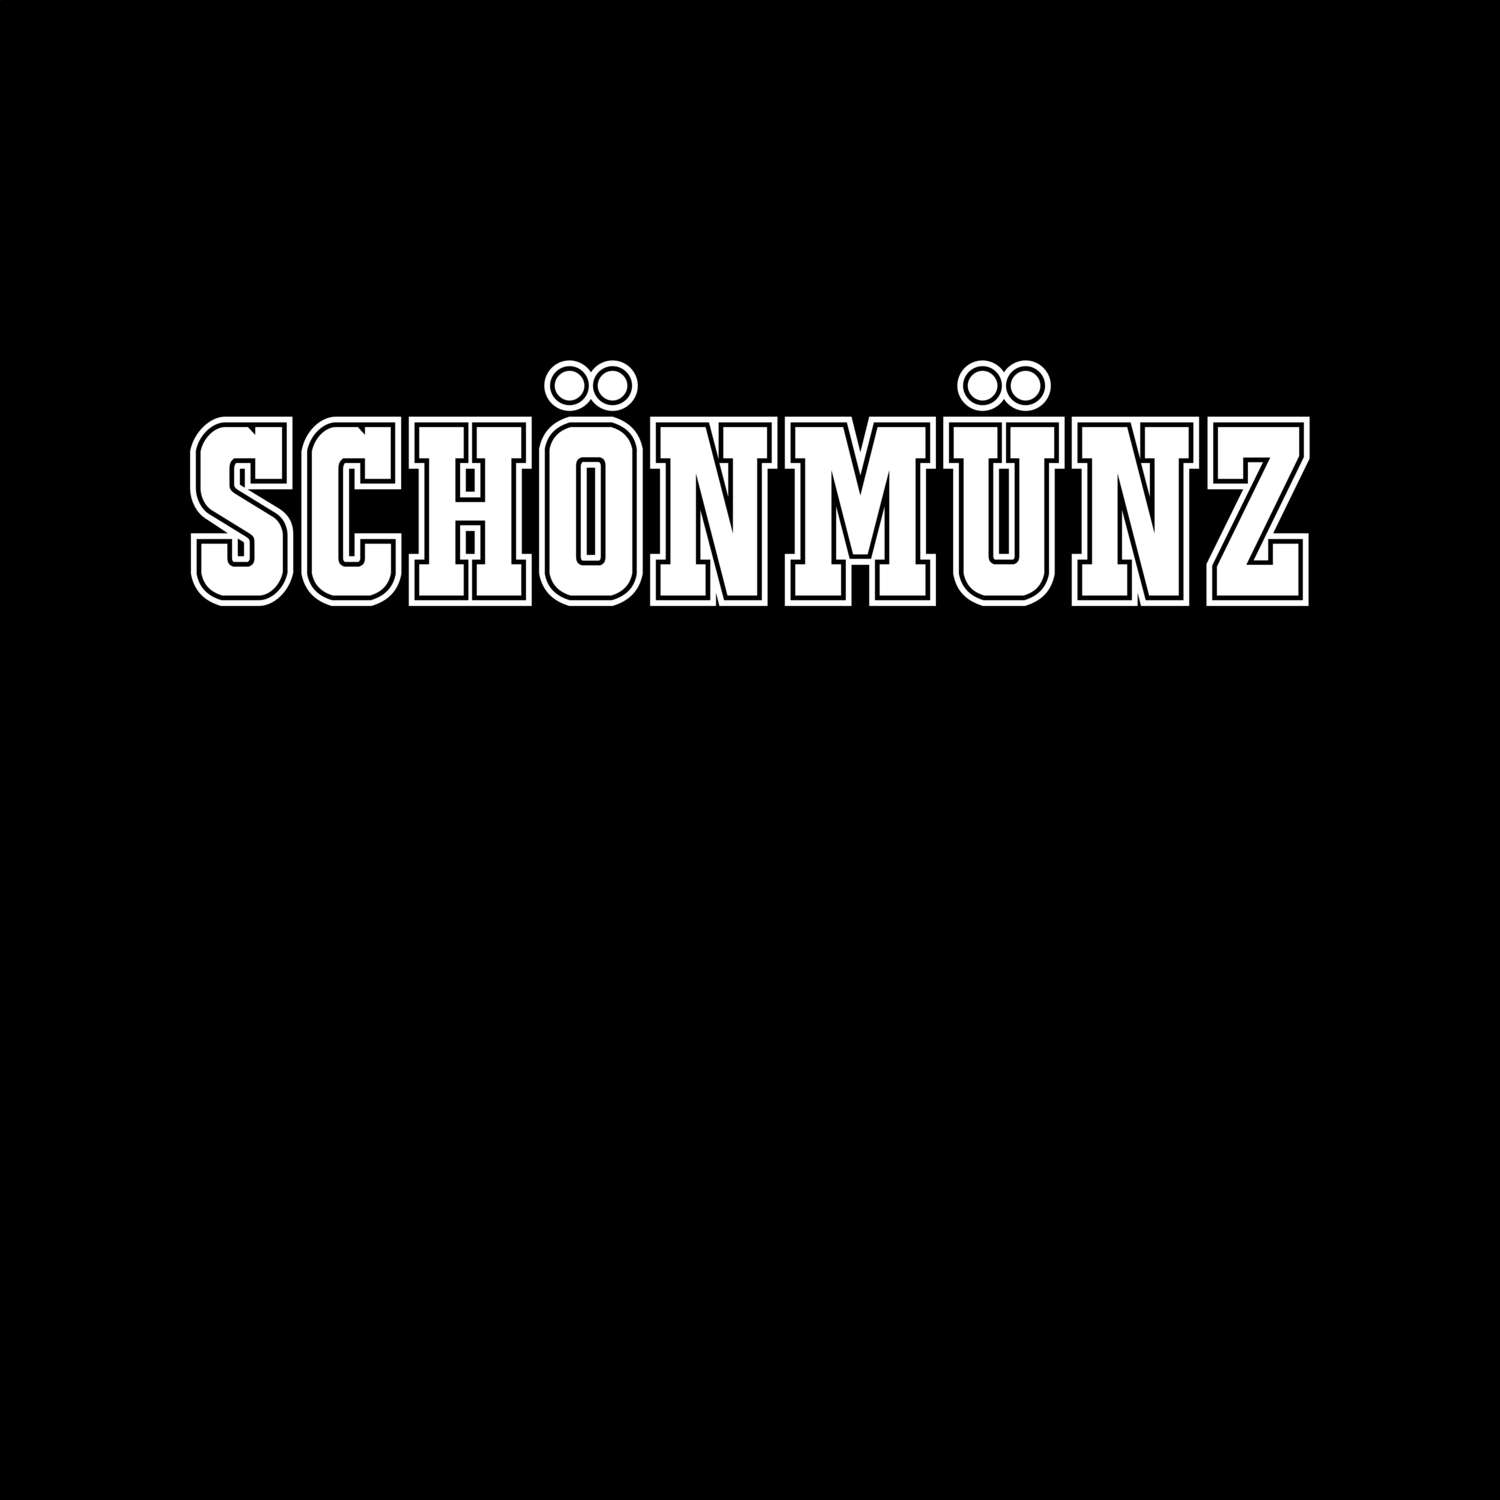 Schönmünz T-Shirt »Classic«